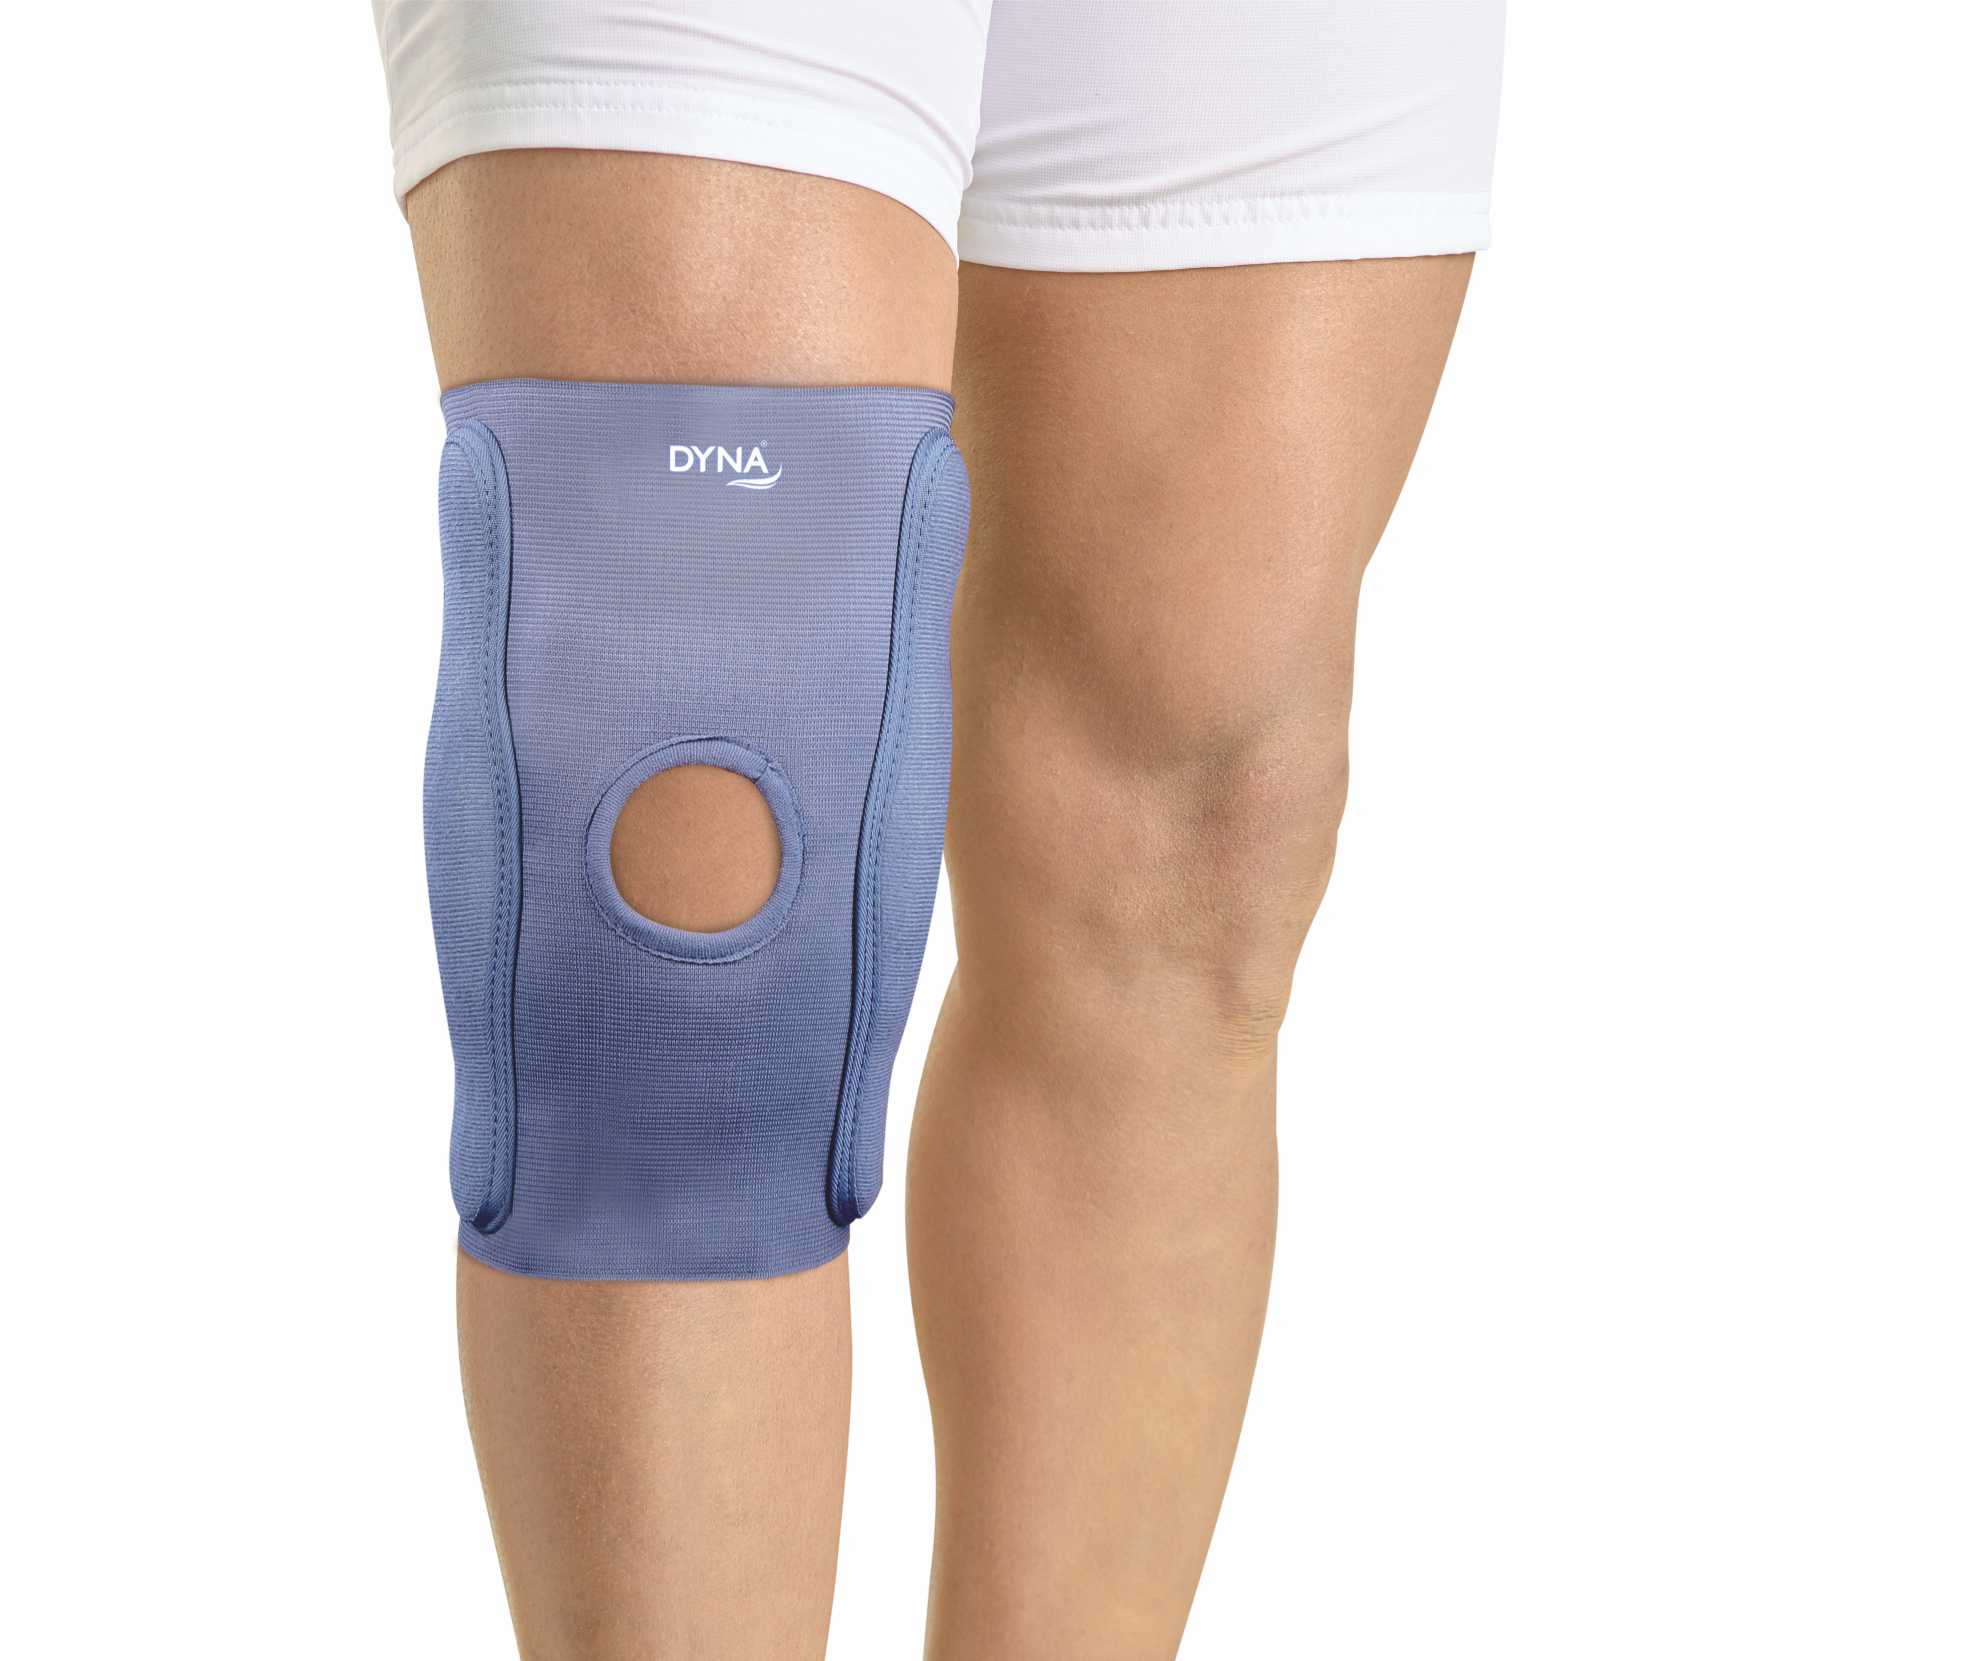 Dyna Hinged Knee Brace Open Patella - Dynamic Techno Medicals